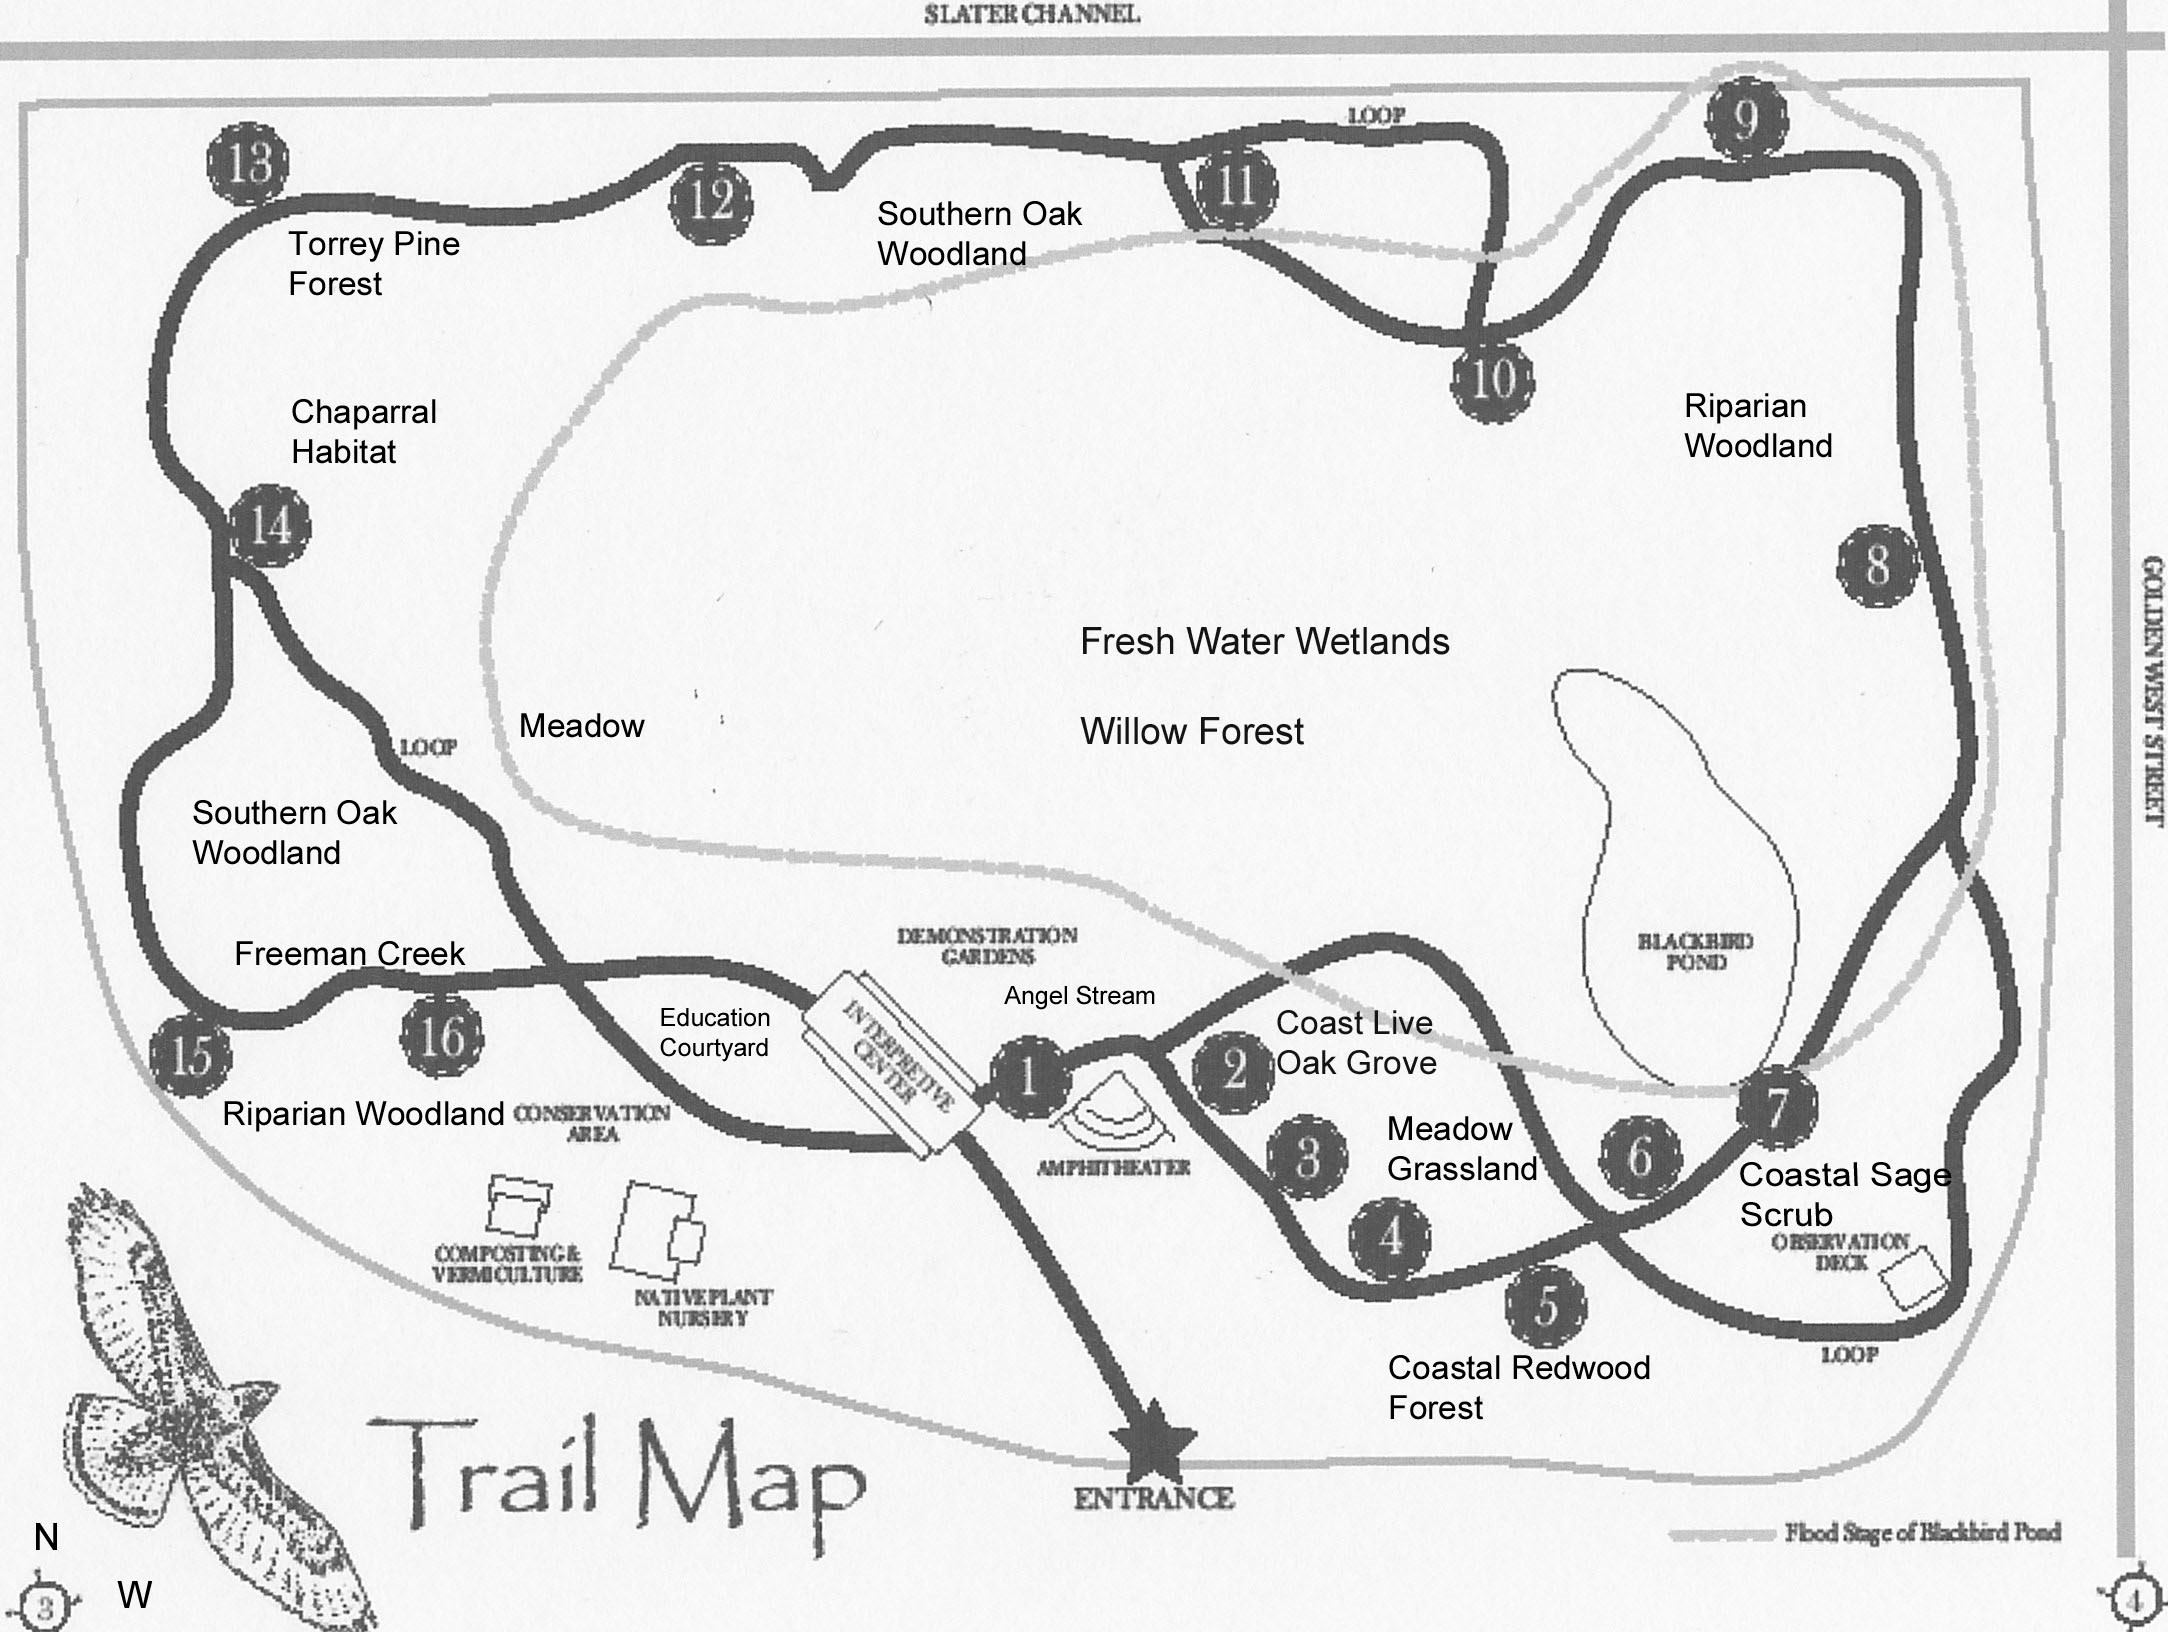 Shipley Trail Map